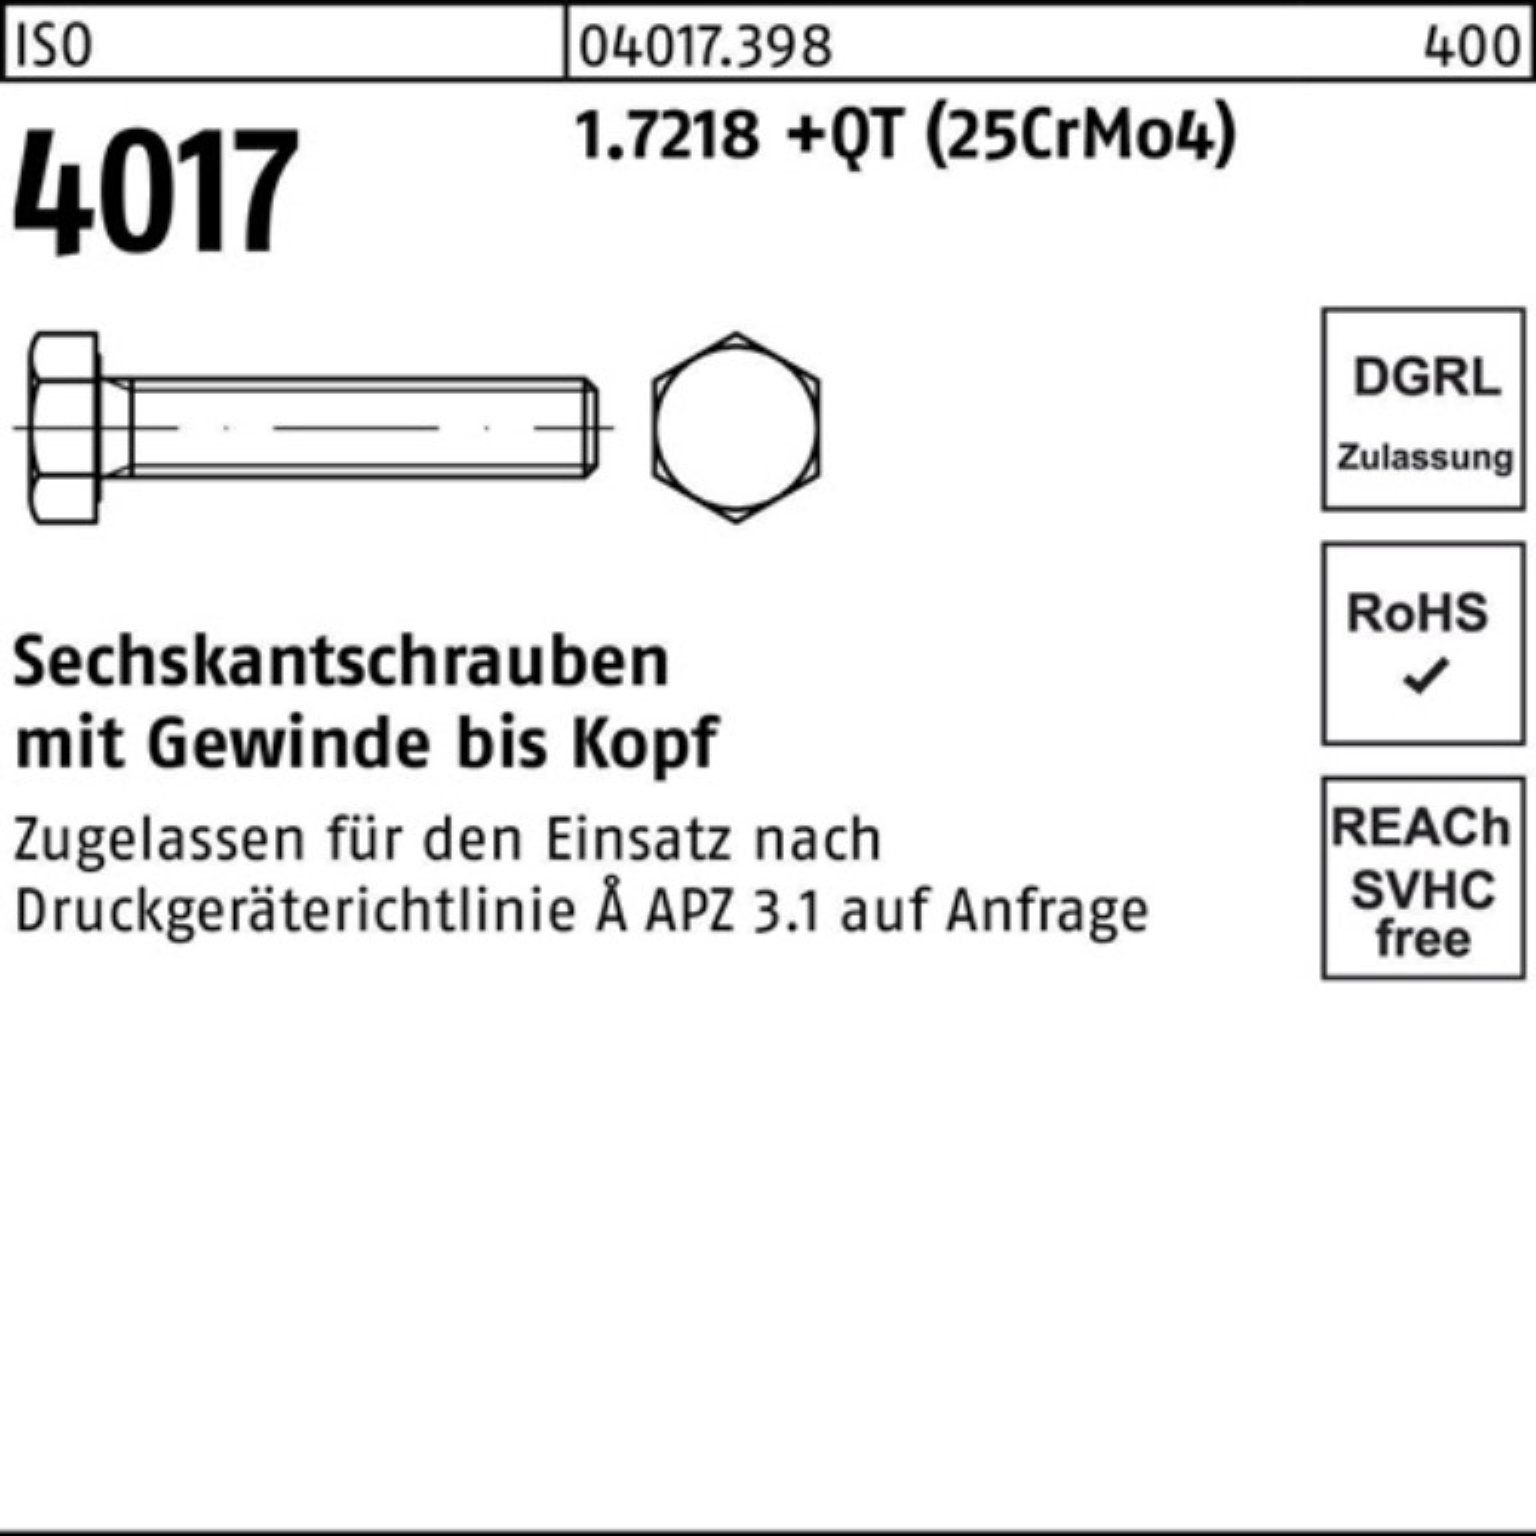 Bufab 4017 100 Pack ISO Sechskantschraube VG +QT (25CrMo4) Sechskantschraube 1.7218 M33x 100er